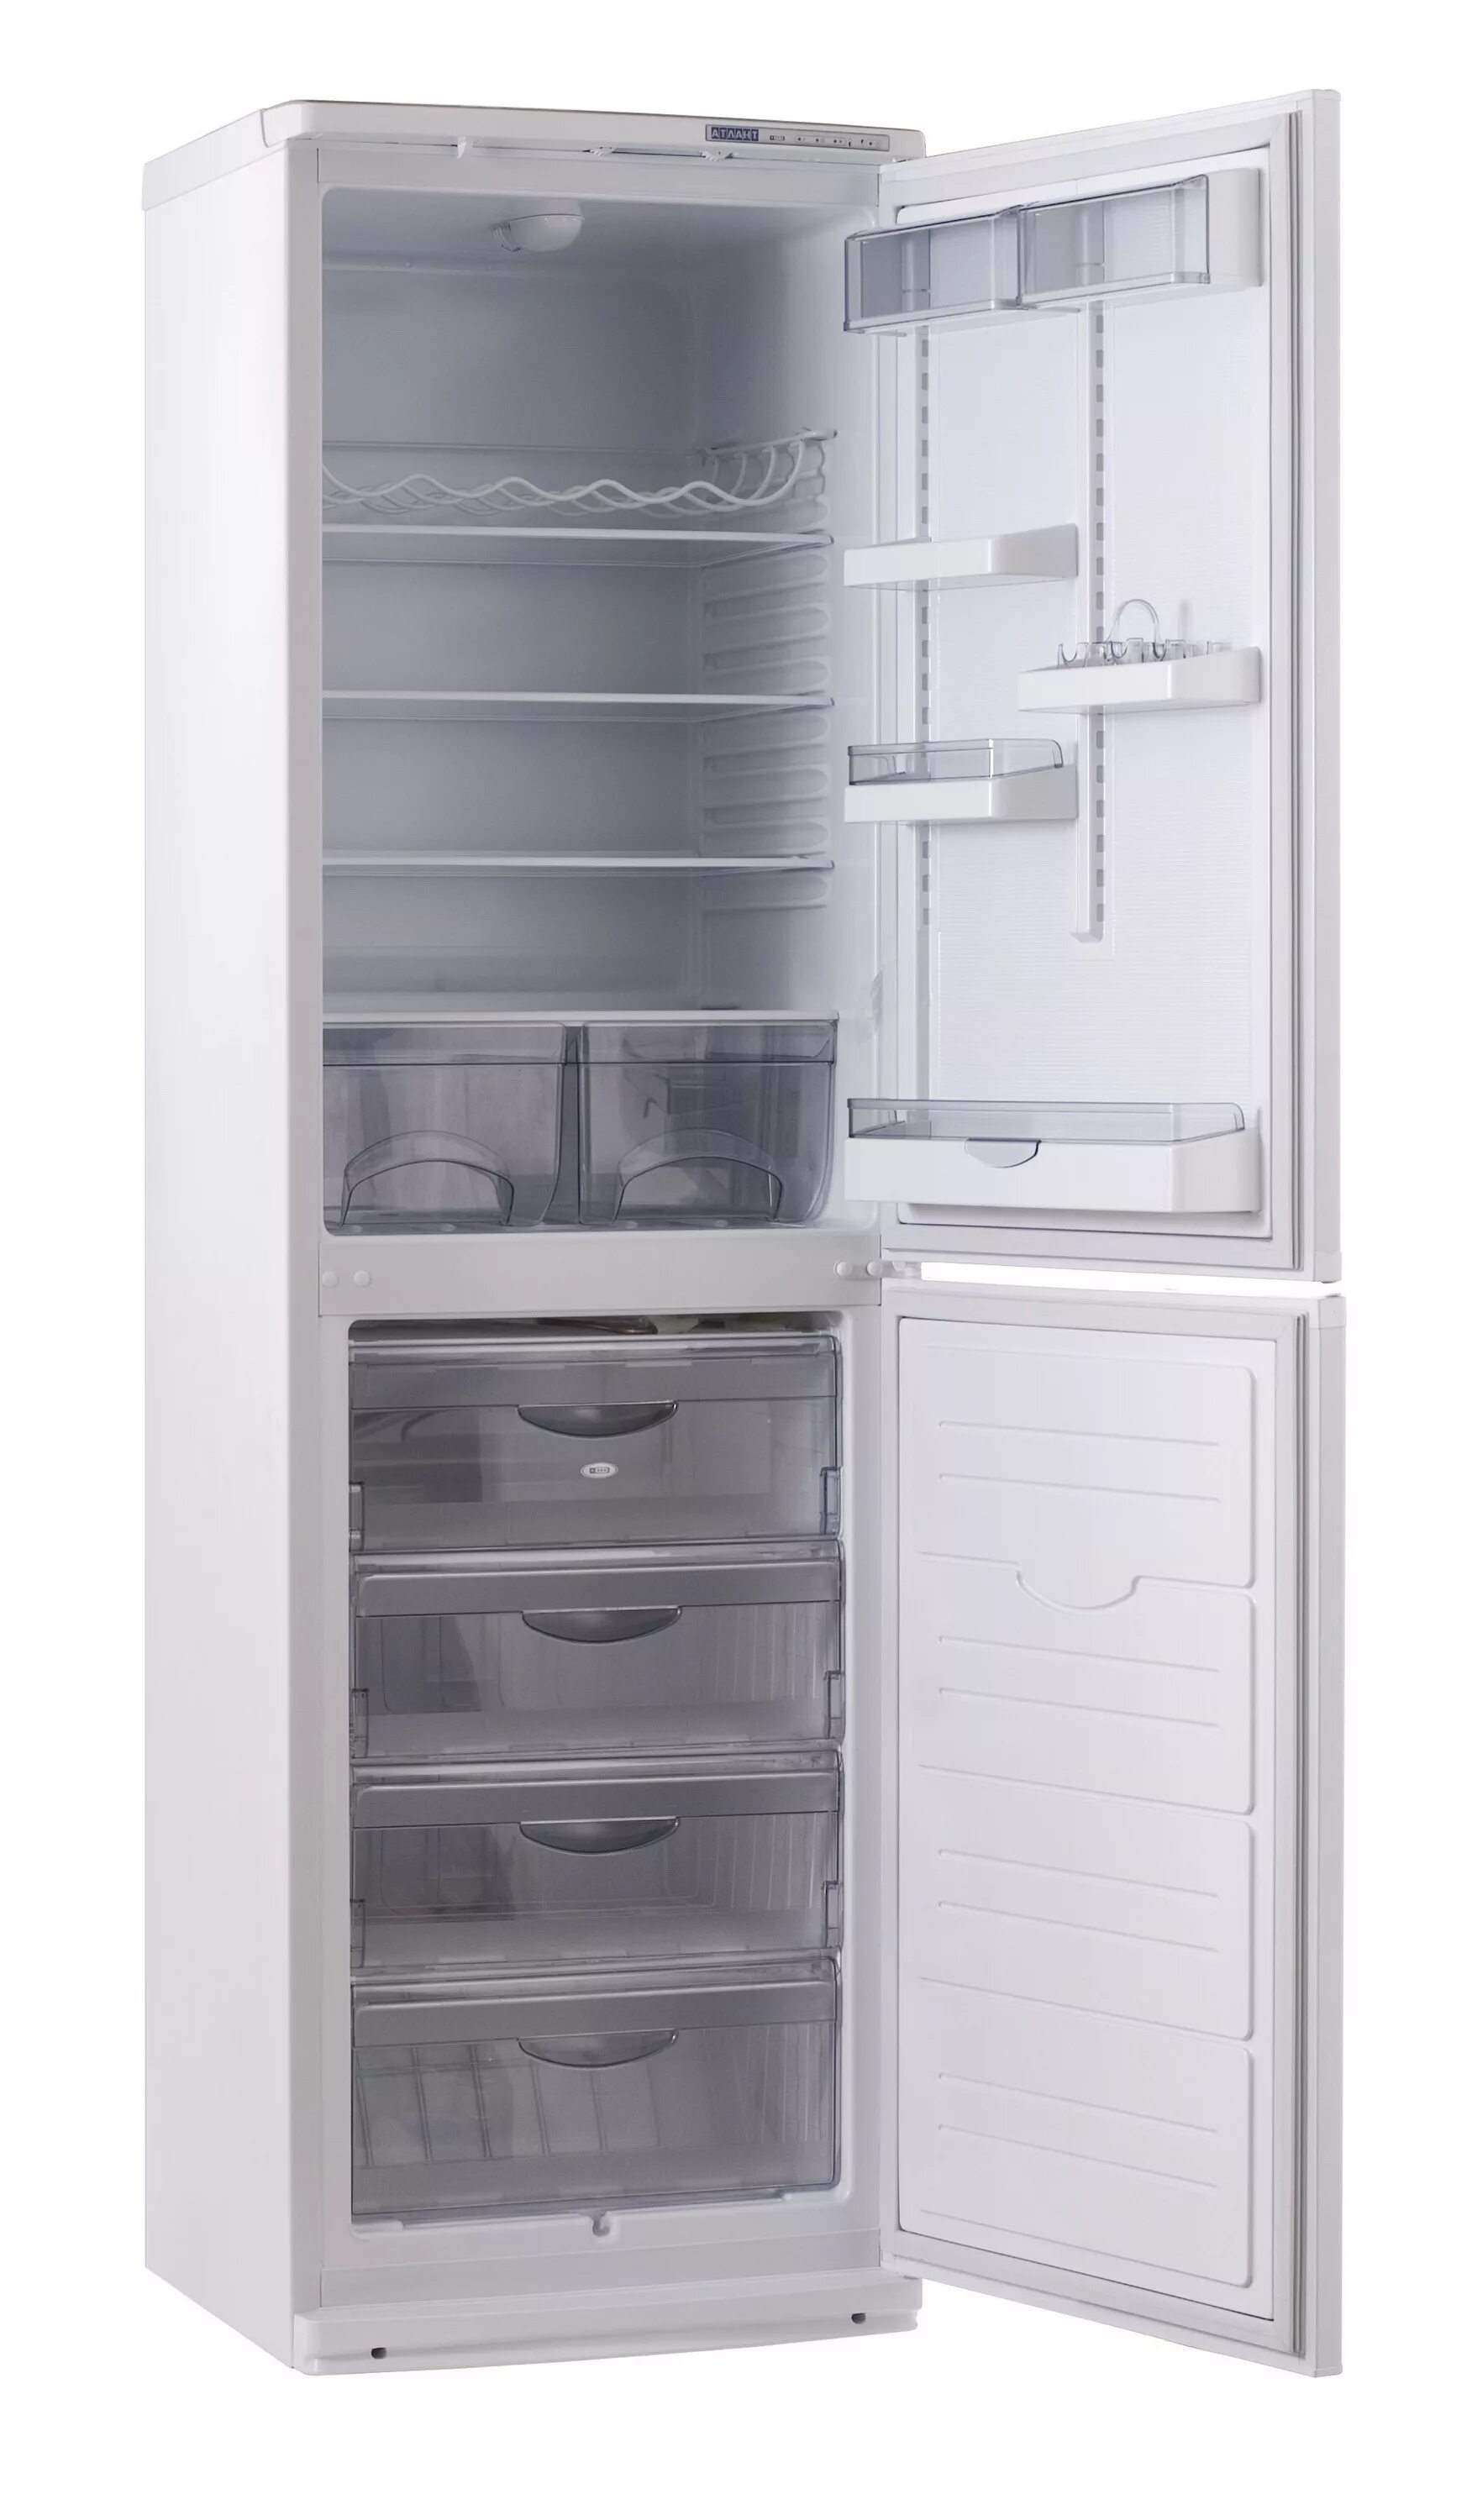 Холодильник Атлант хм 6025-031. Холодильник-морозильник Атлант хм-6025-031. Холодильник Атлант 6025. Холодильник Атлант двухкомпрессорный хм-6025-031. Купить холодильник 6025 031